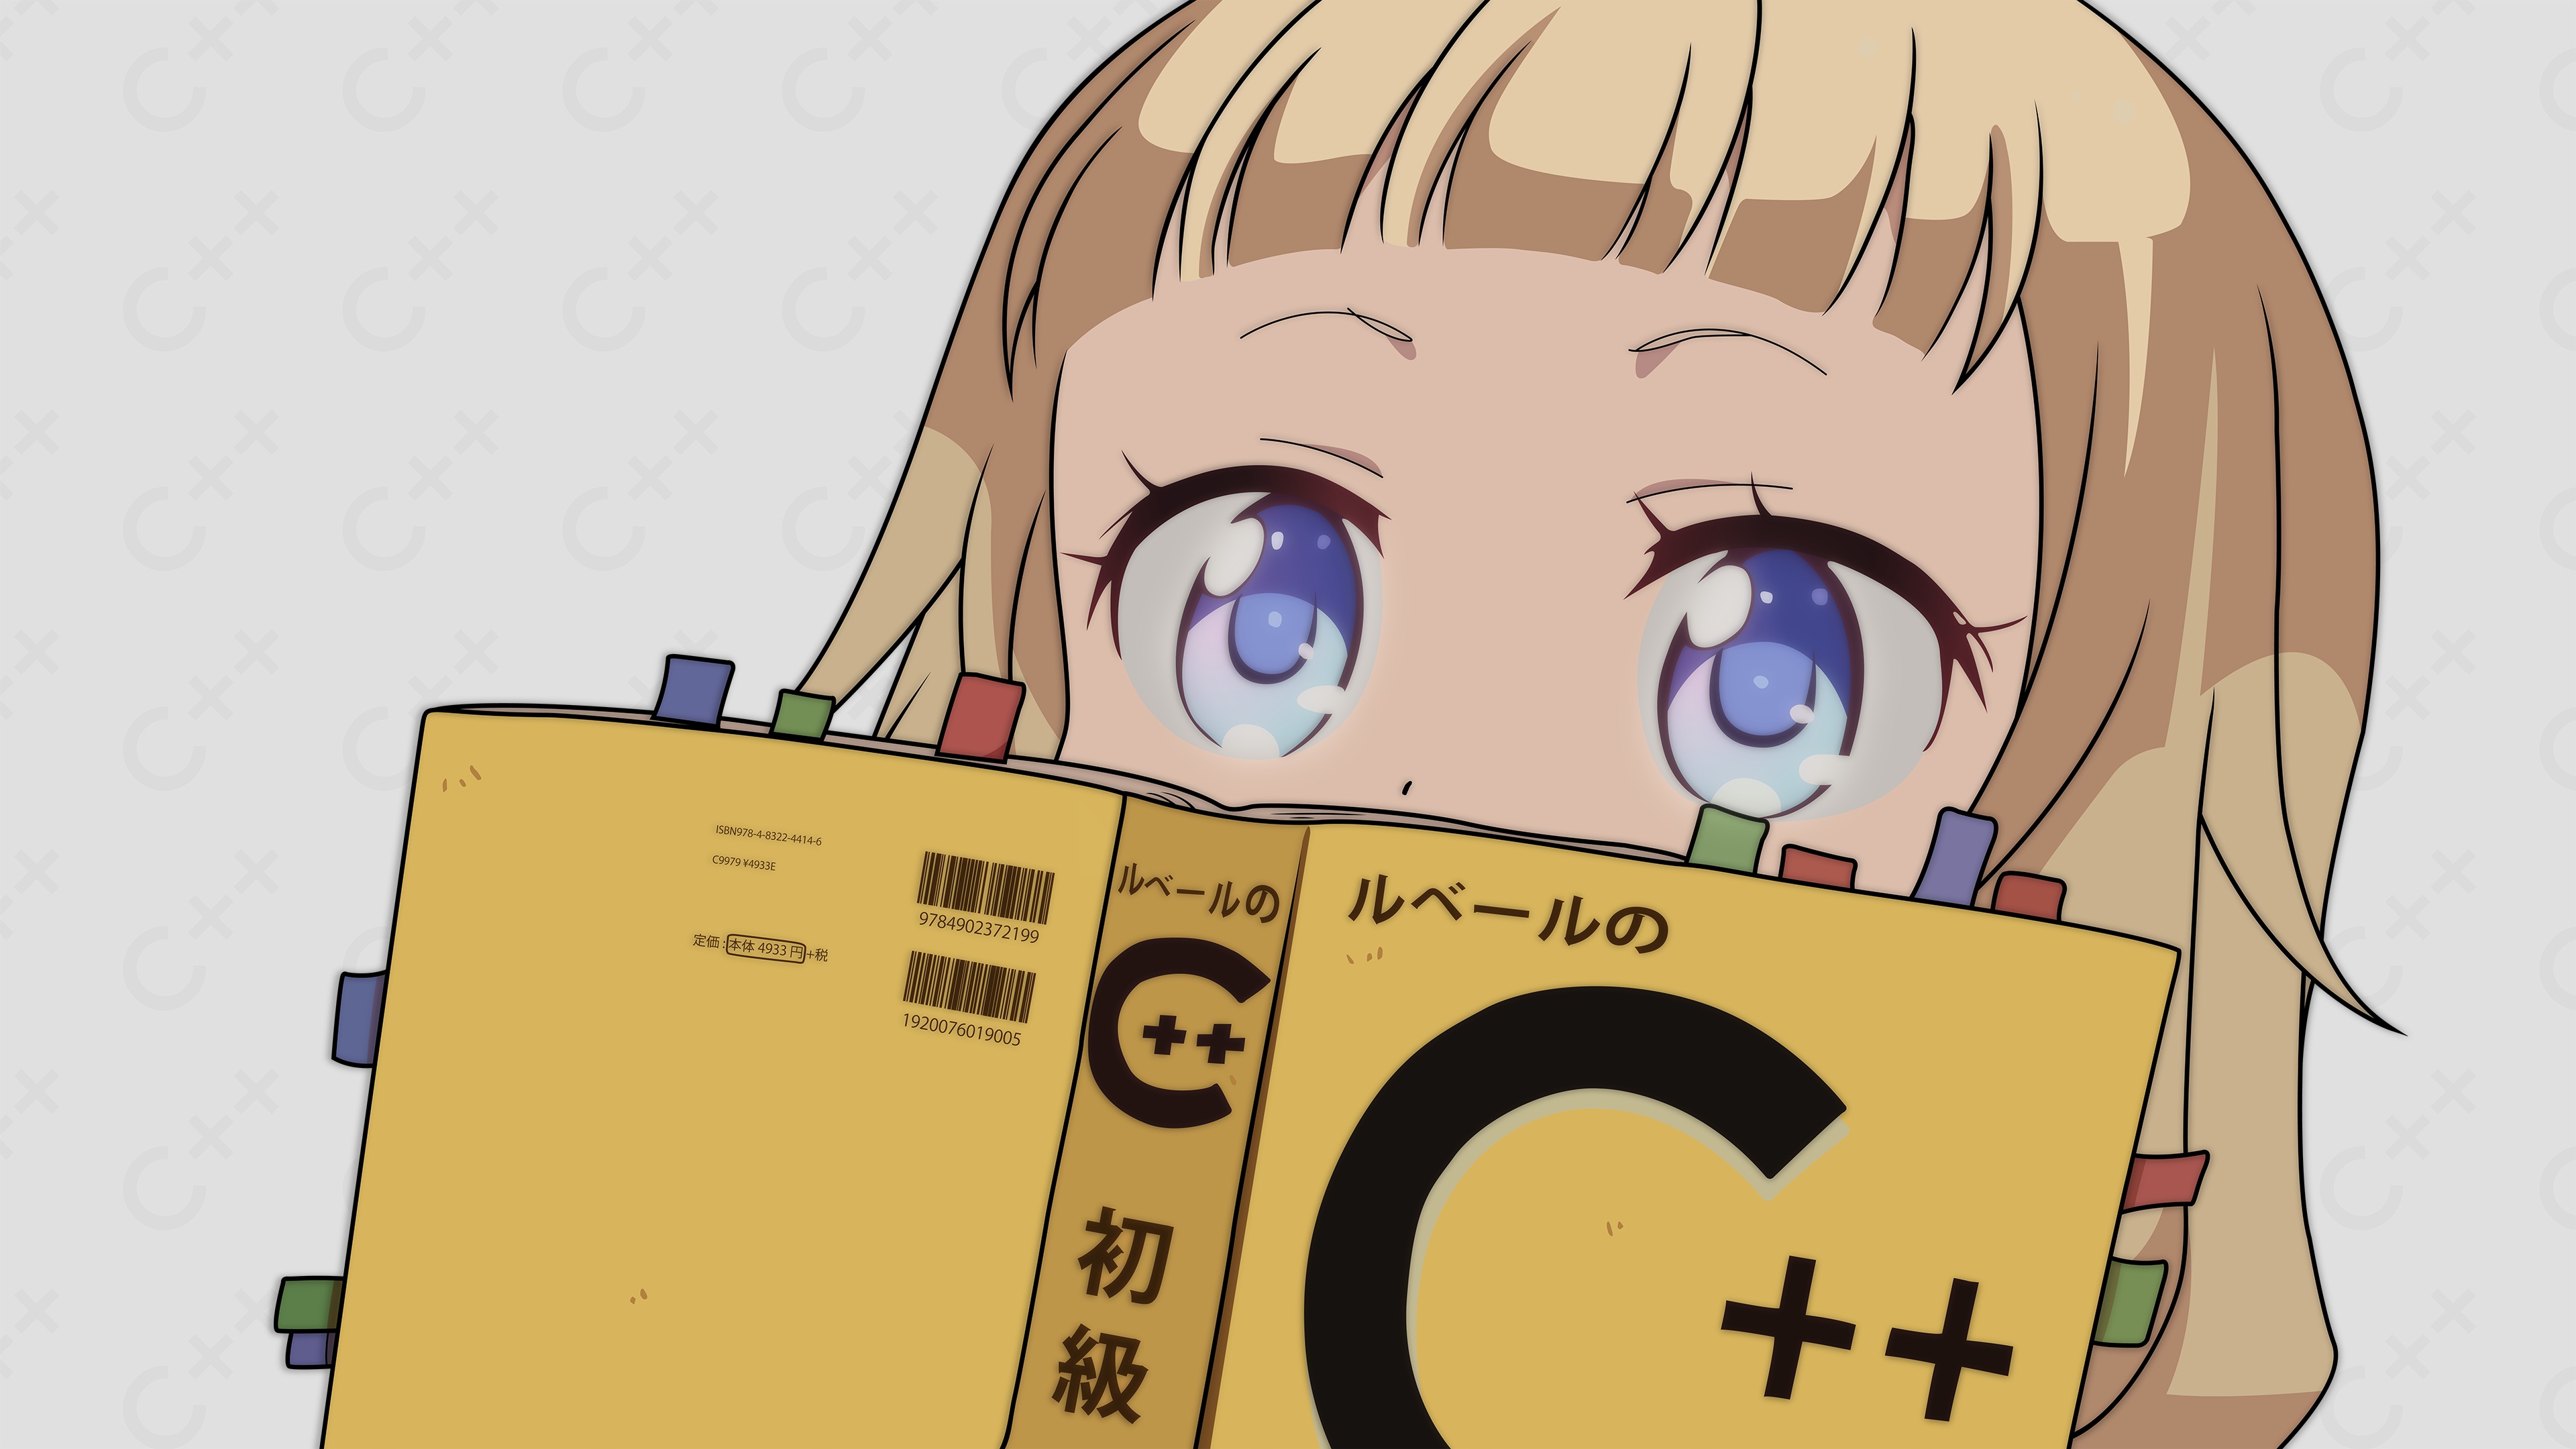 Wallpaper, anime, c, programming, blue eyes, book cover 3840x2160